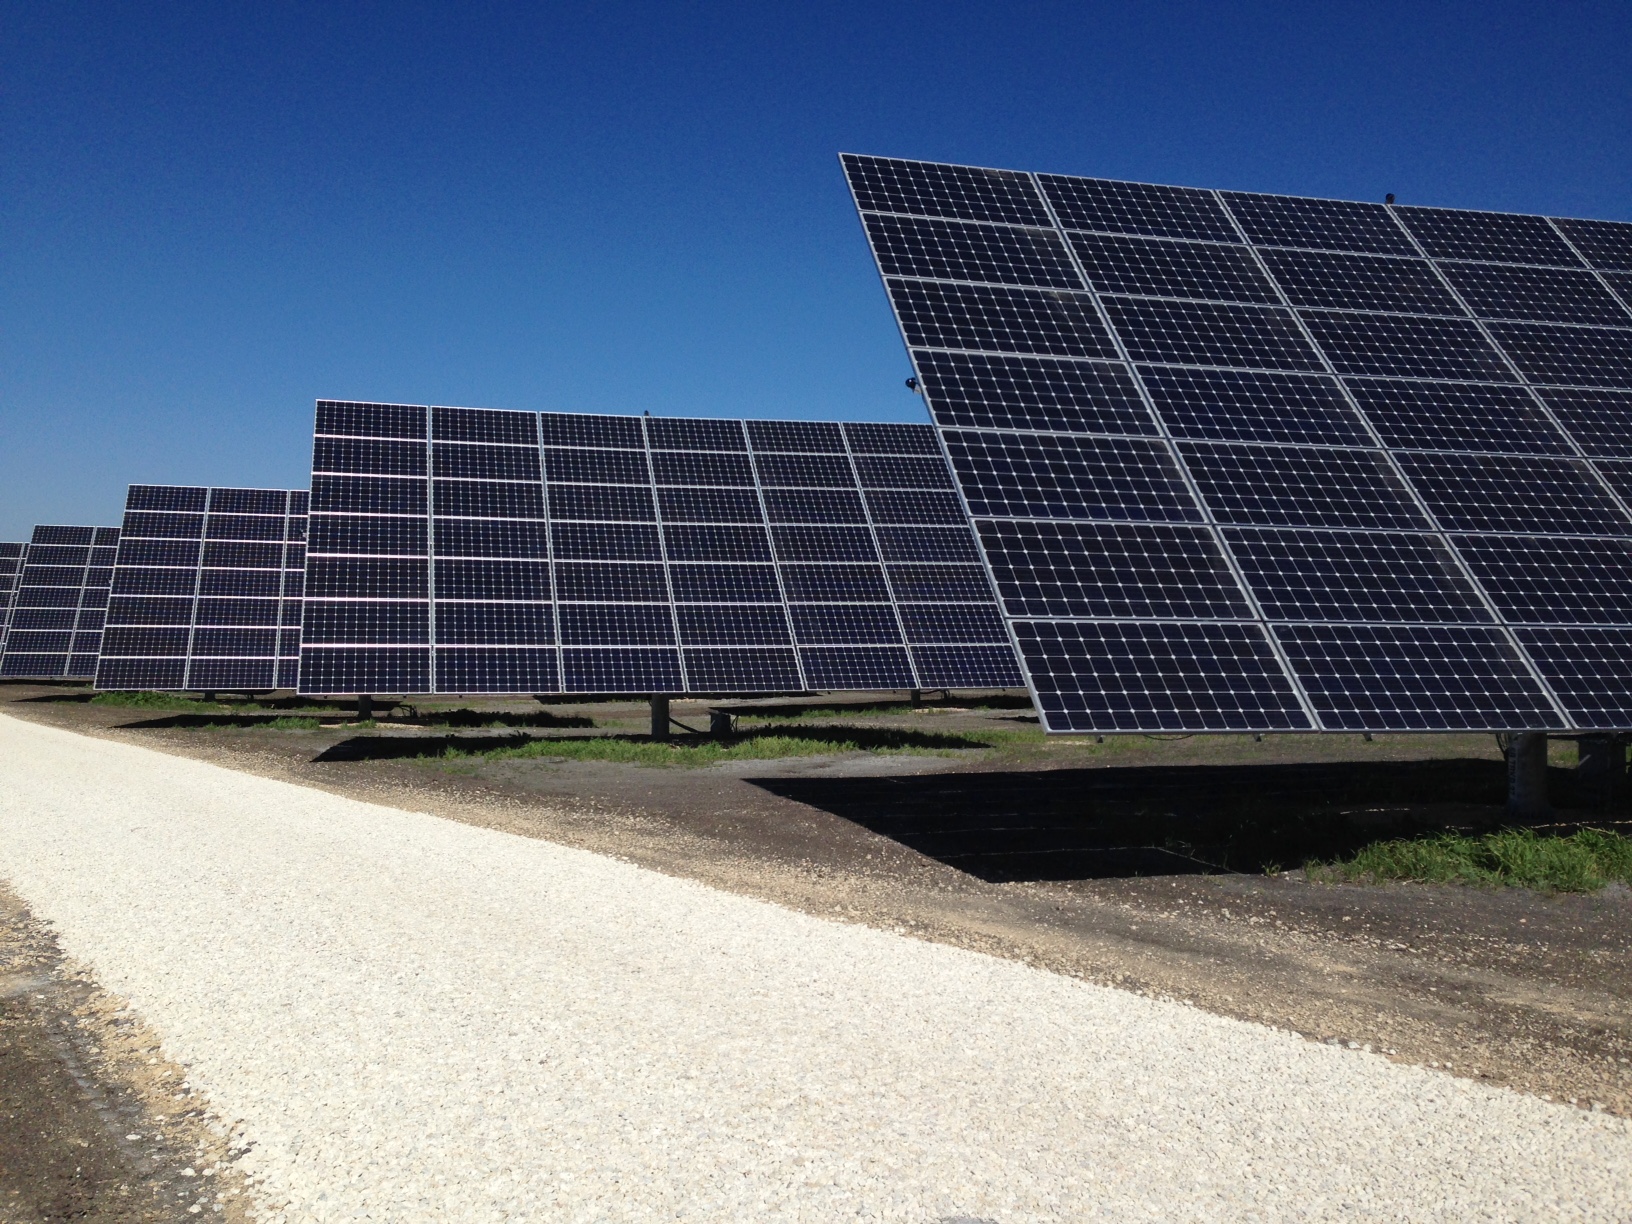 cps-energy-to-add-180-megawatts-of-solar-power-to-portfolio